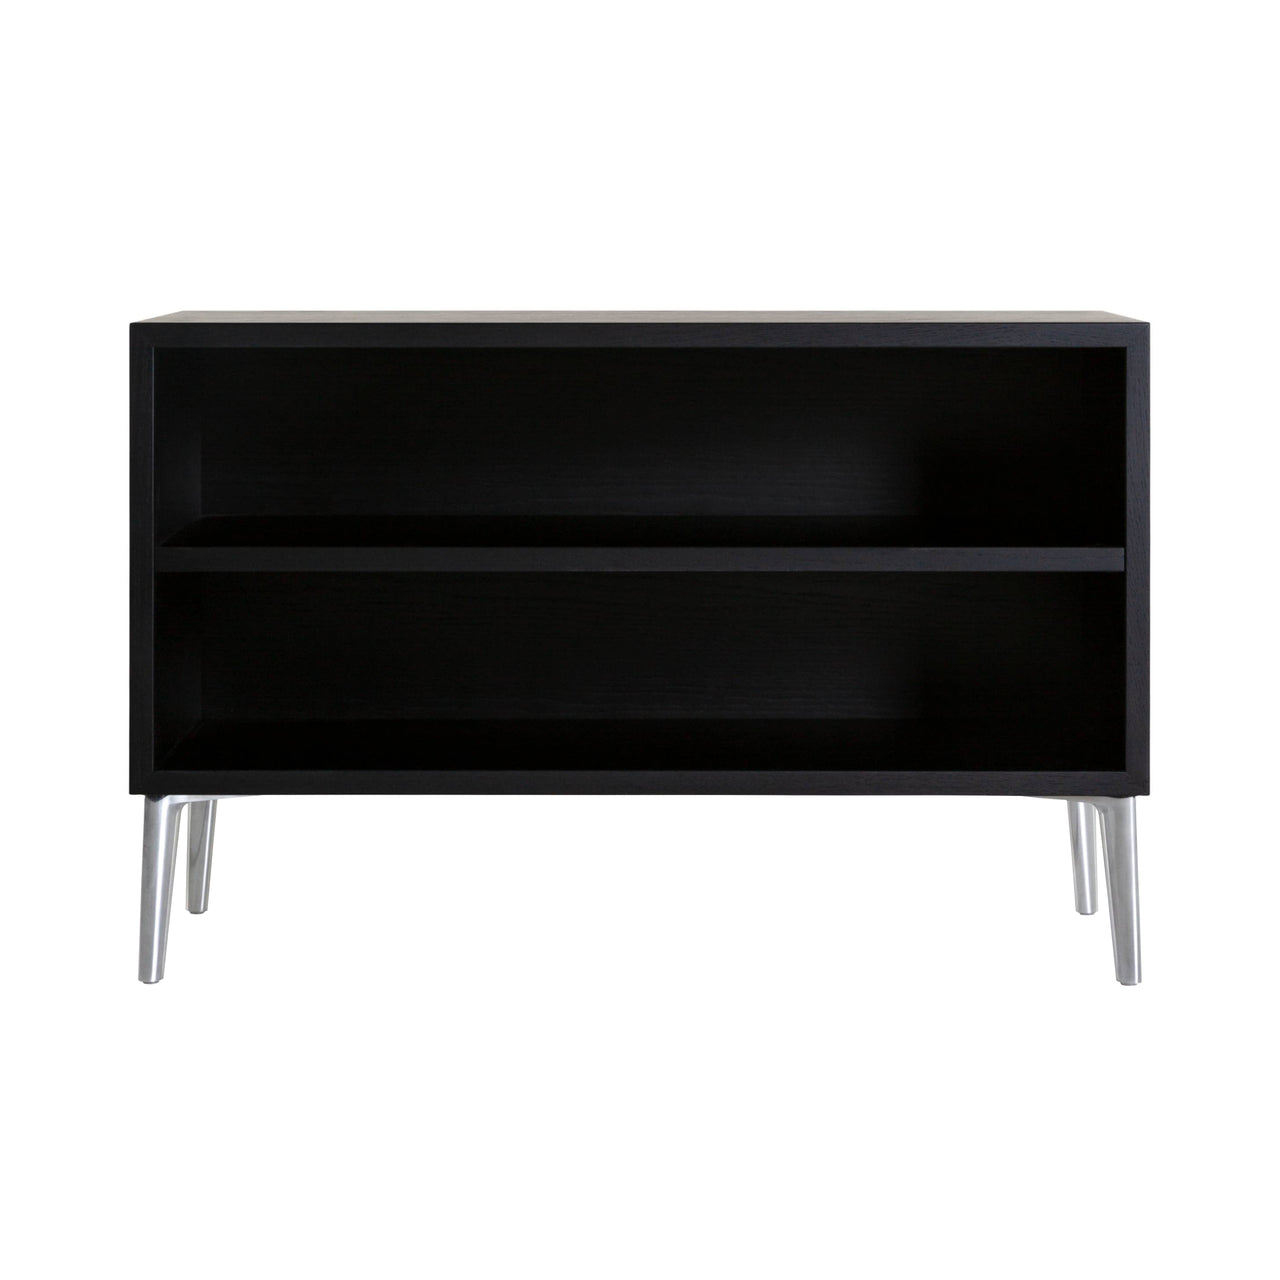 Sofa So Good Demi Double Shelf: Black